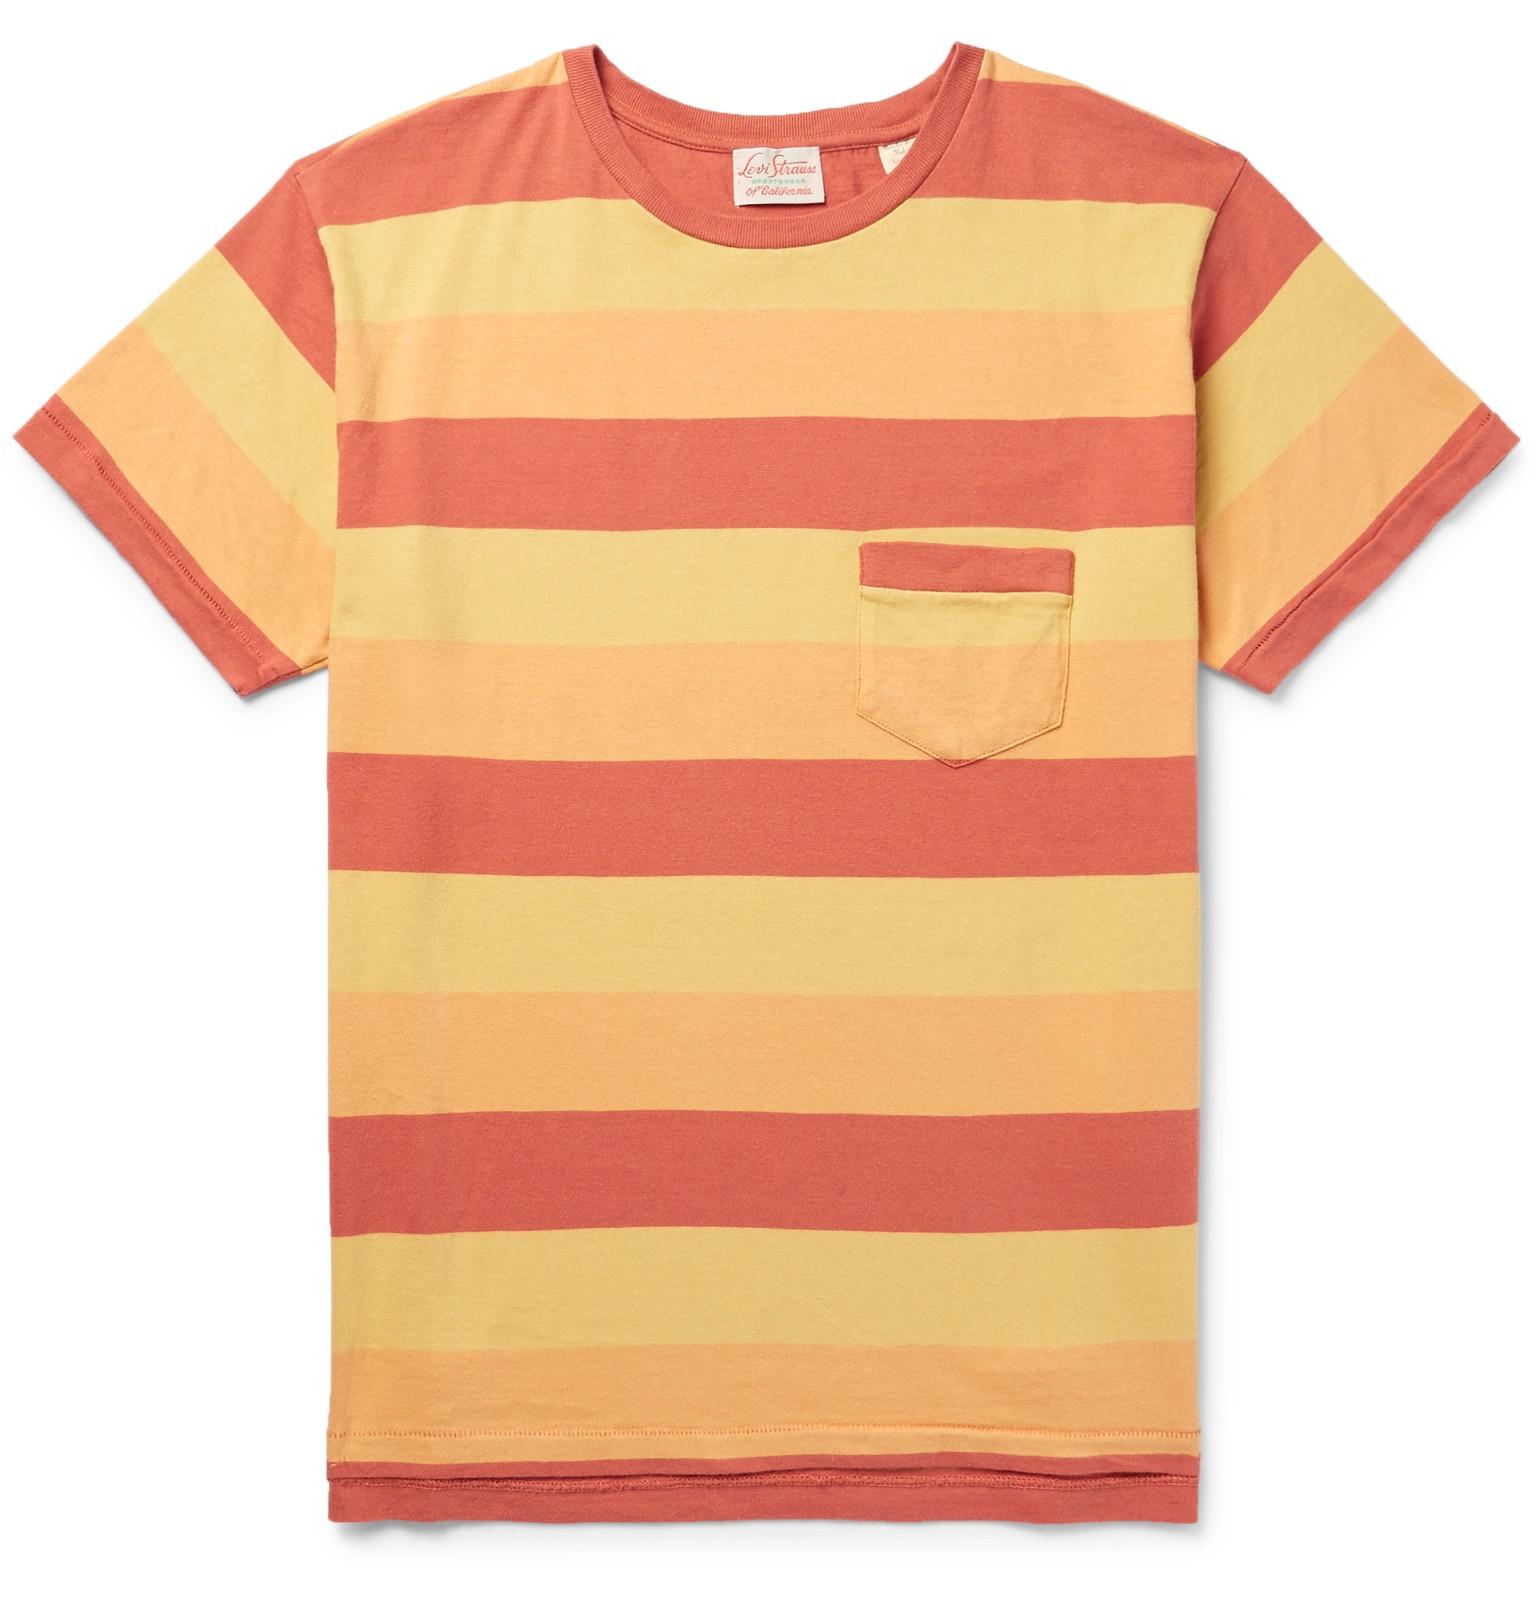 T-shirt Levi's Vintage Clothing Orange size M International in